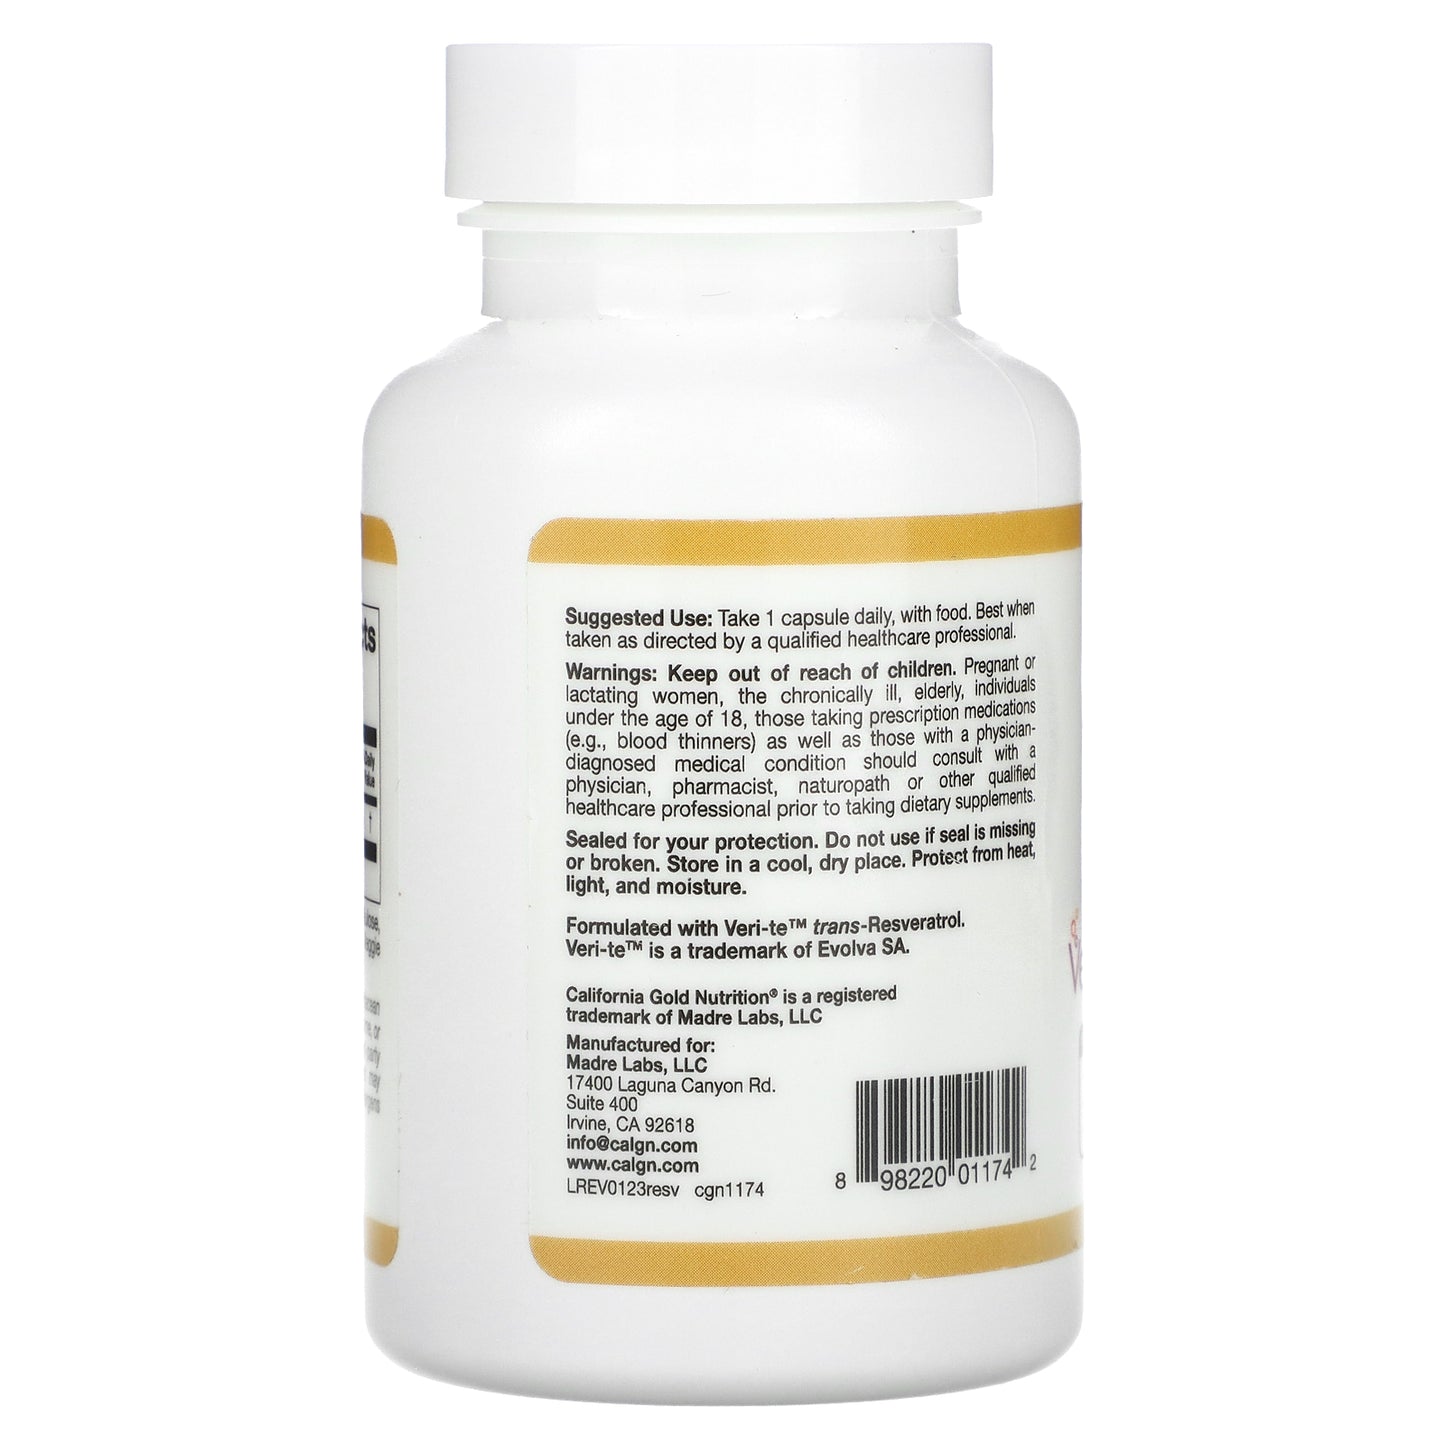 California Gold Nutrition, trans-Resveratrol, 200 mg, 60 Veggie Capsules